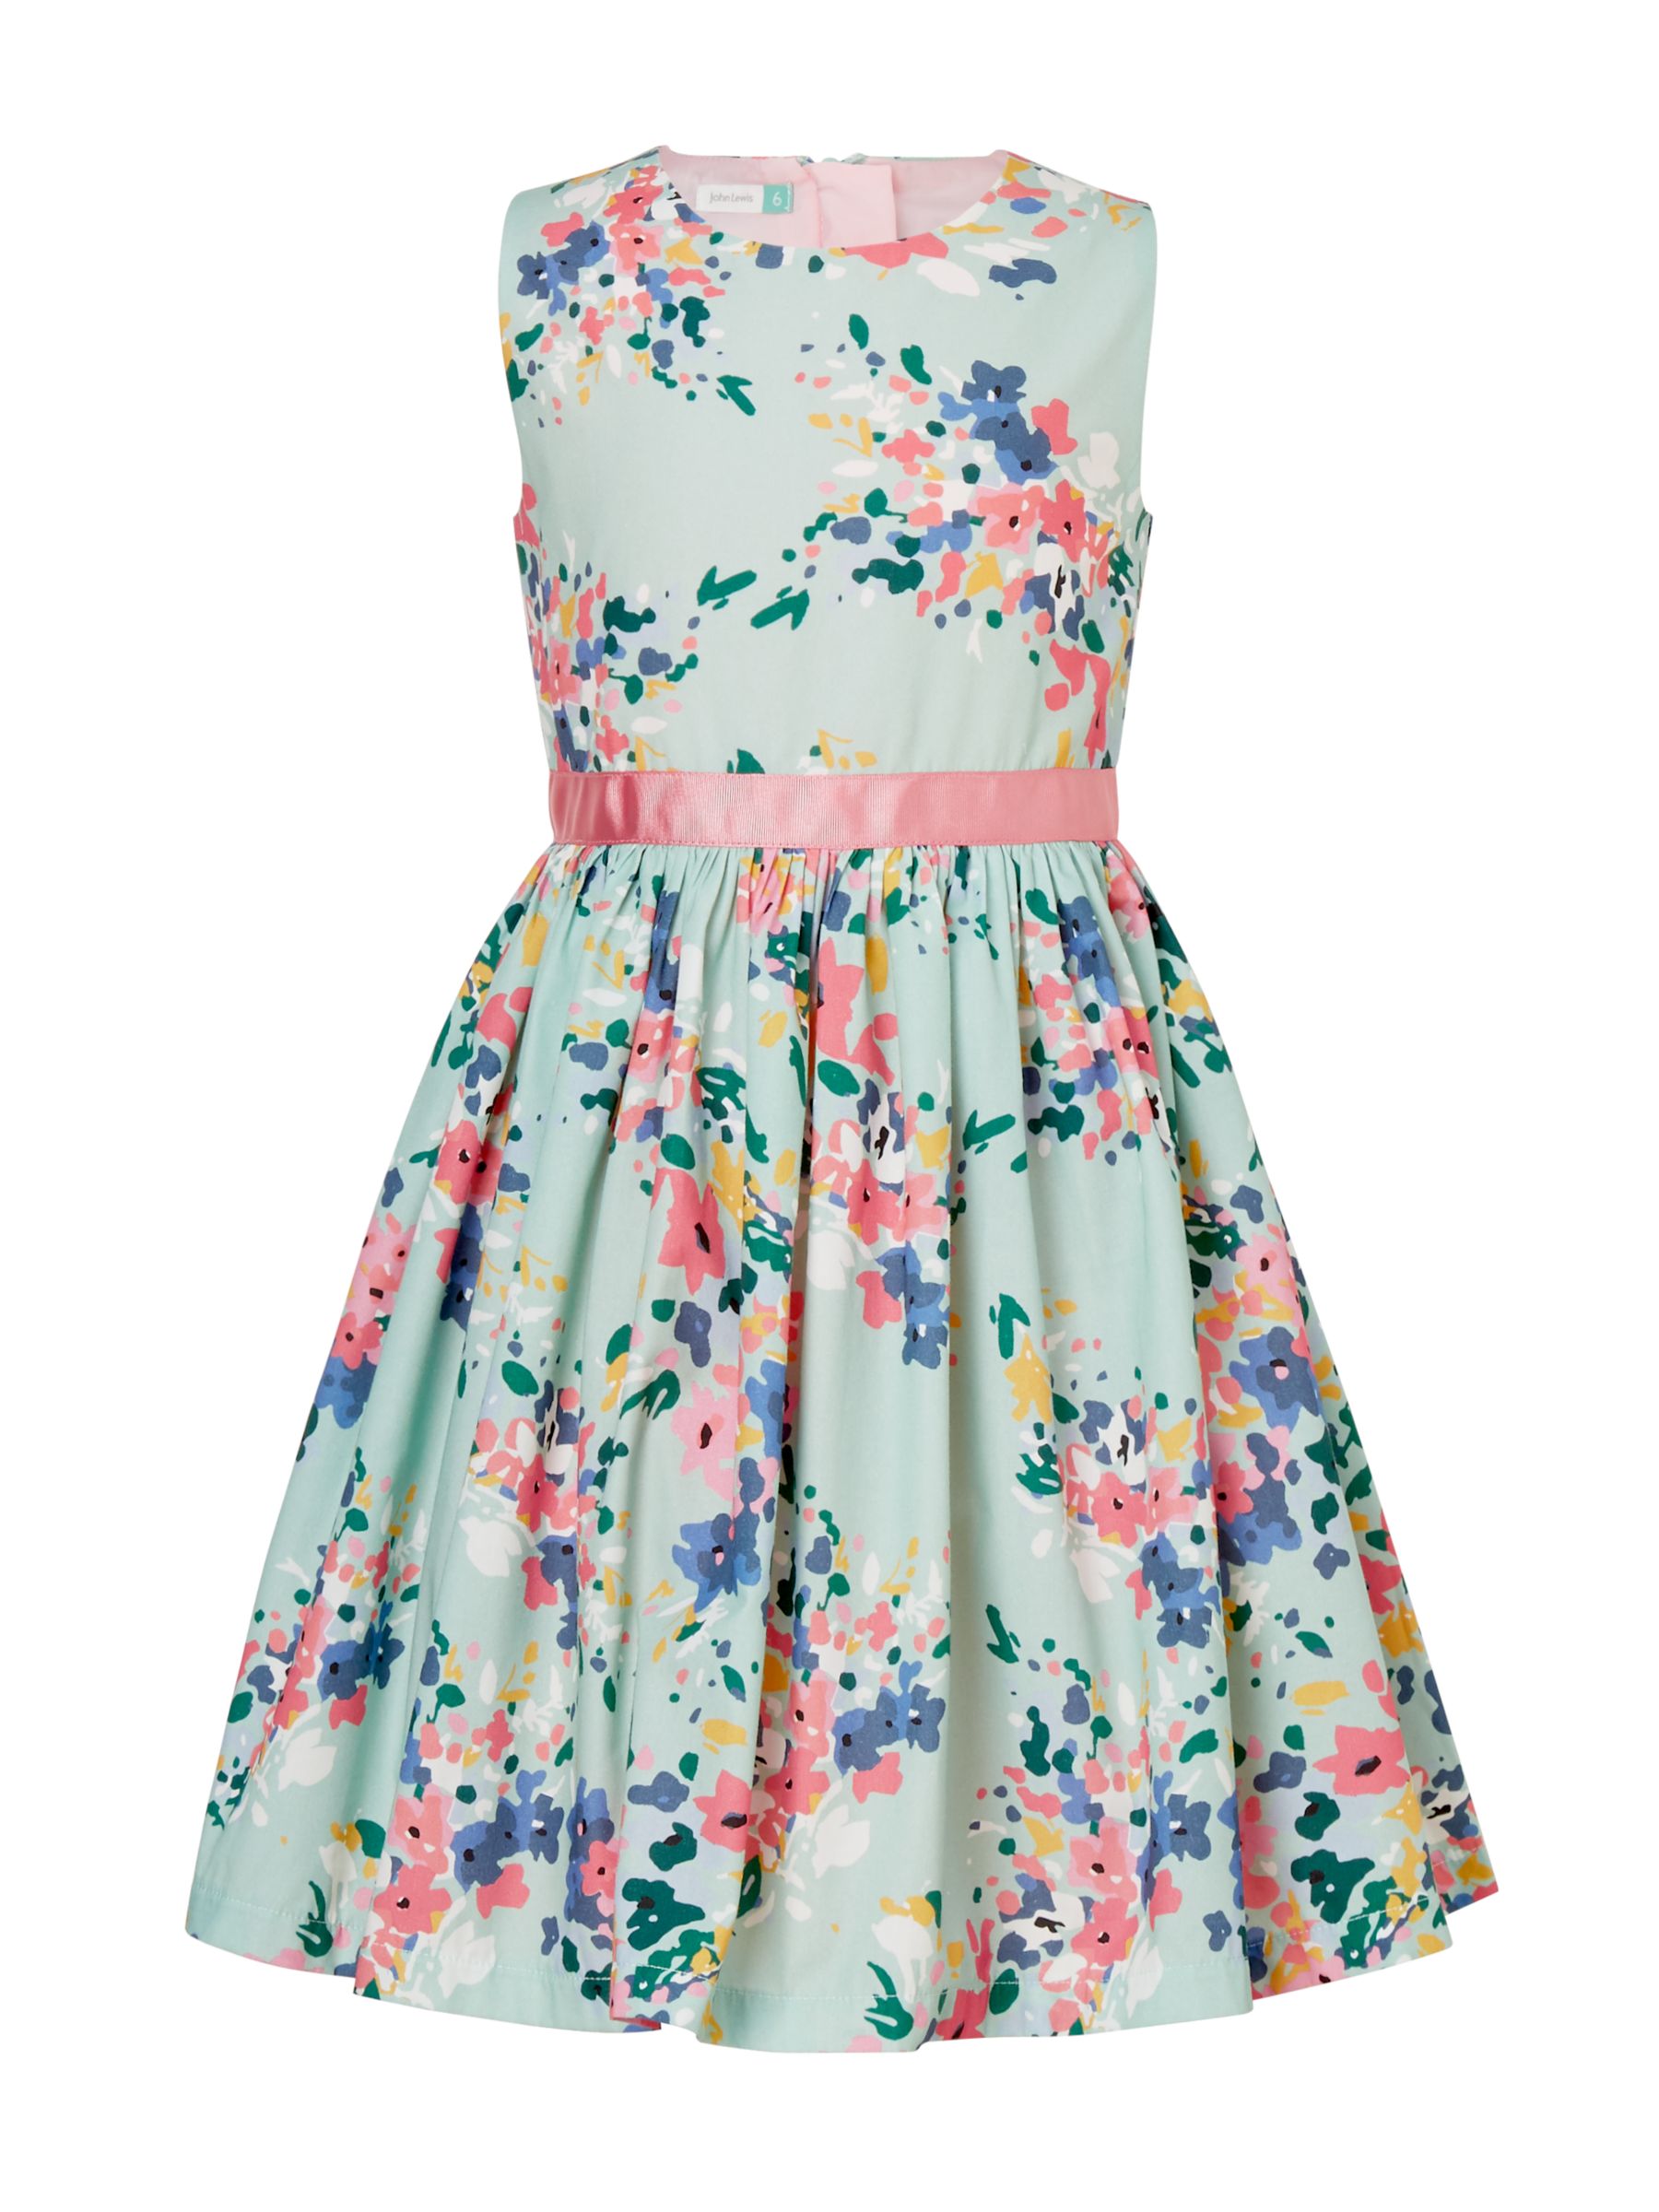 John Lewis Girls' Blossom Print Dress, Teal at John Lewis & Partners